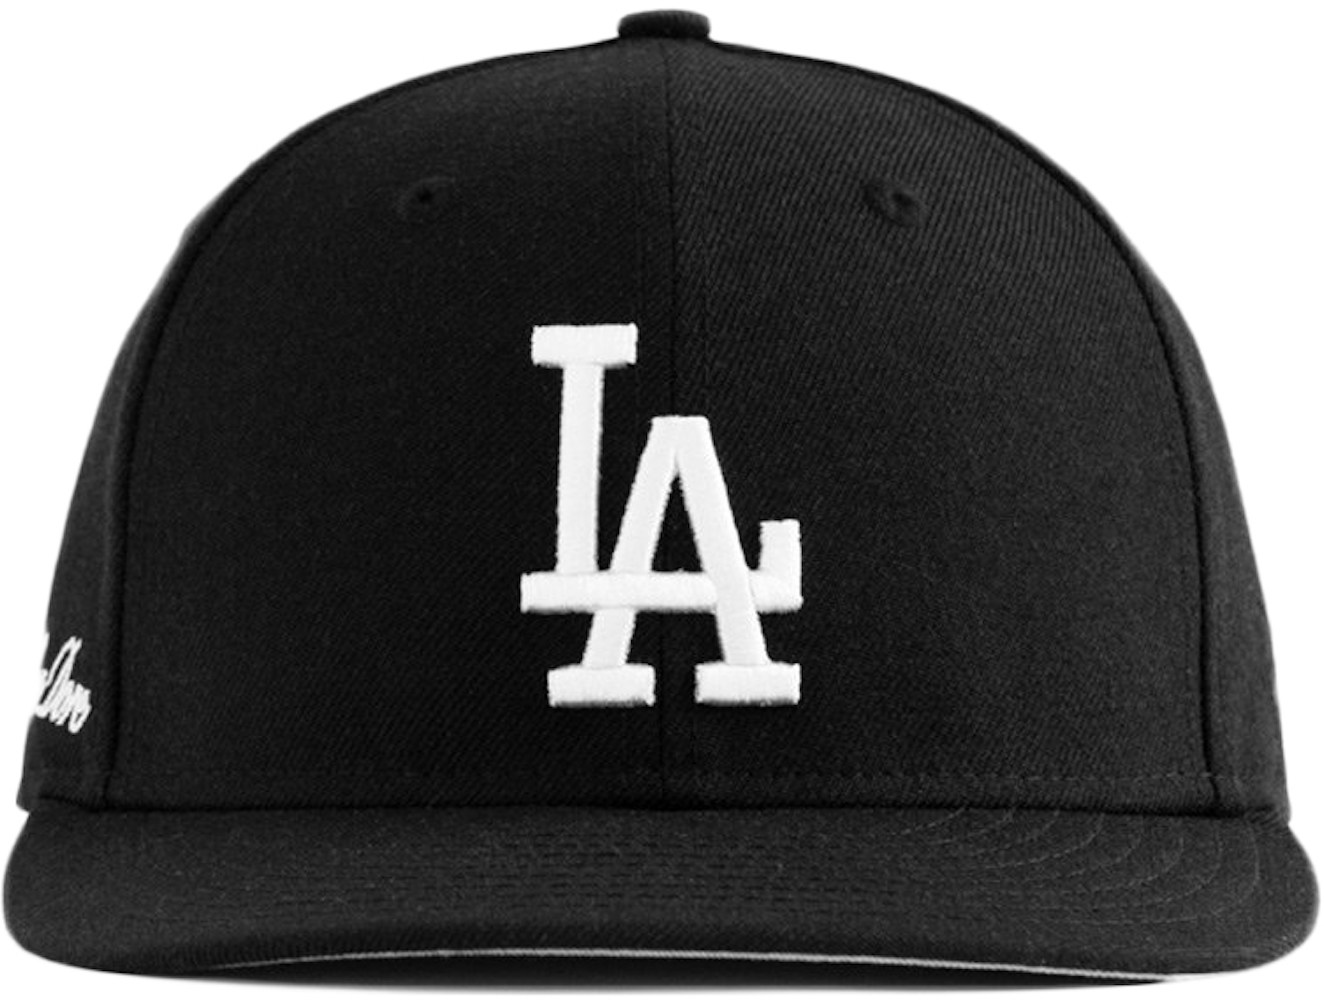 Aime Leon Dore x New Era Dodgers Hat Black - FW20